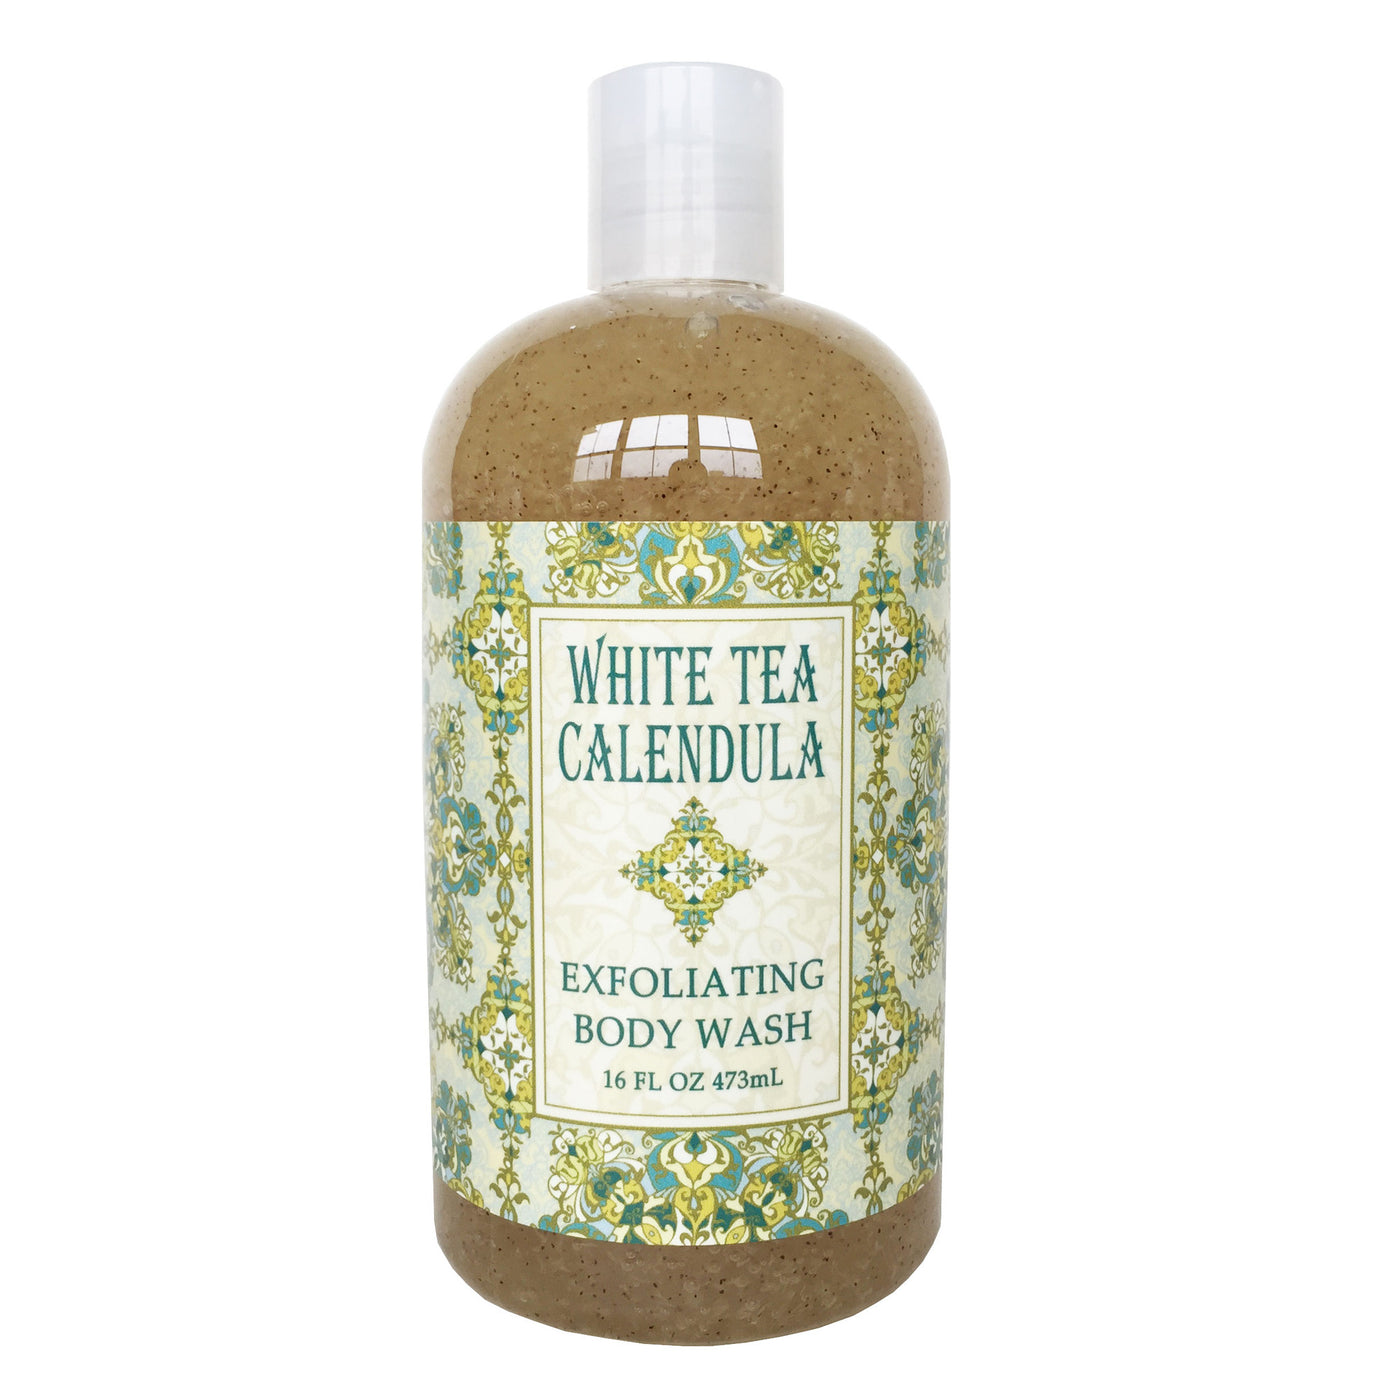 White Tea Calendula Exfoliating Body Wash by Greenwich Bay Trading Co